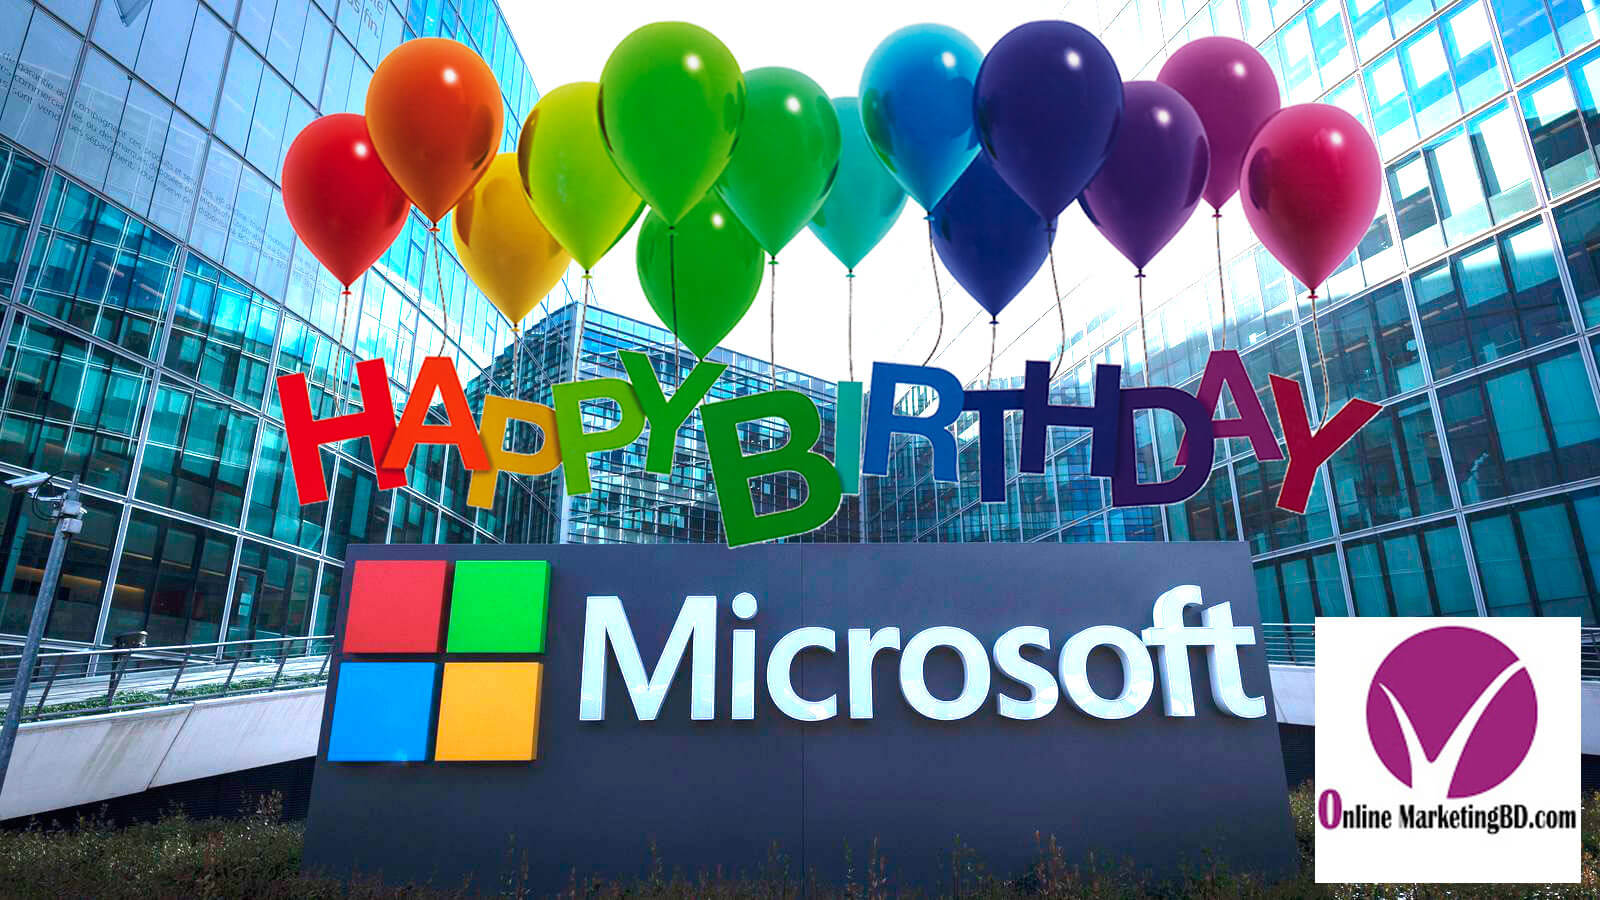 Today-is-the-birthday-of-Soft-giant-Microsoft-online-marketing-bd-hamidur-rahman-bappa